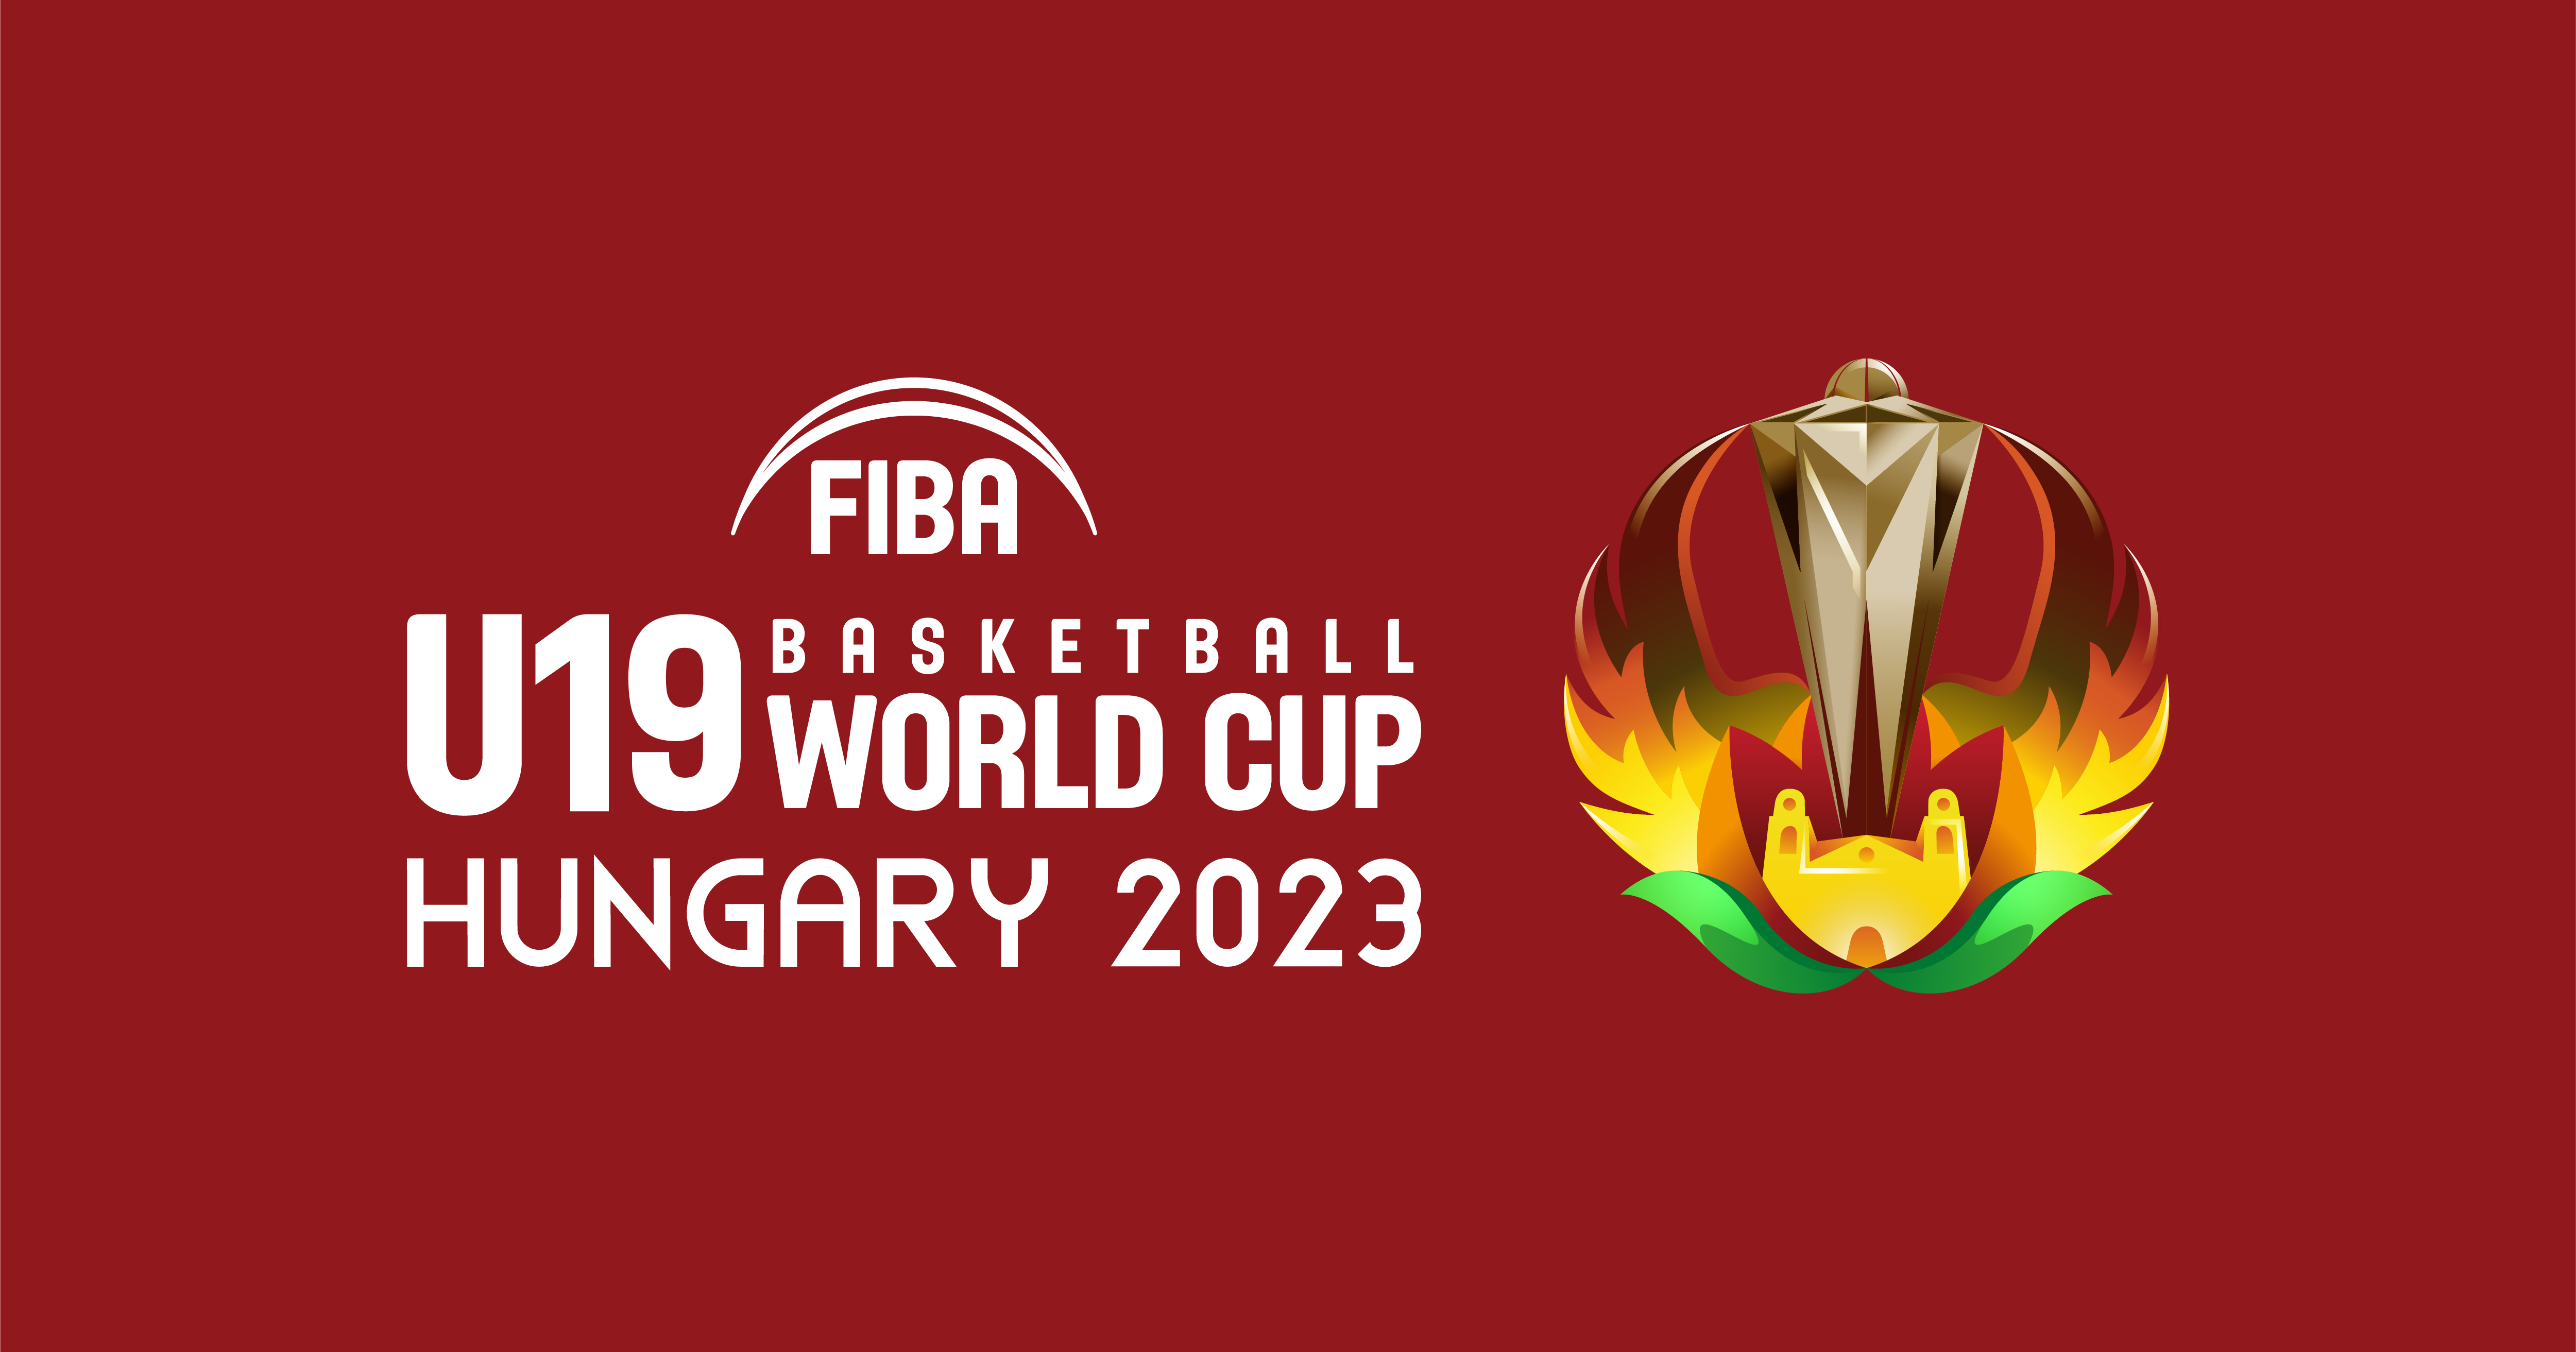 FIBA U19 Basketball World Cup 2023